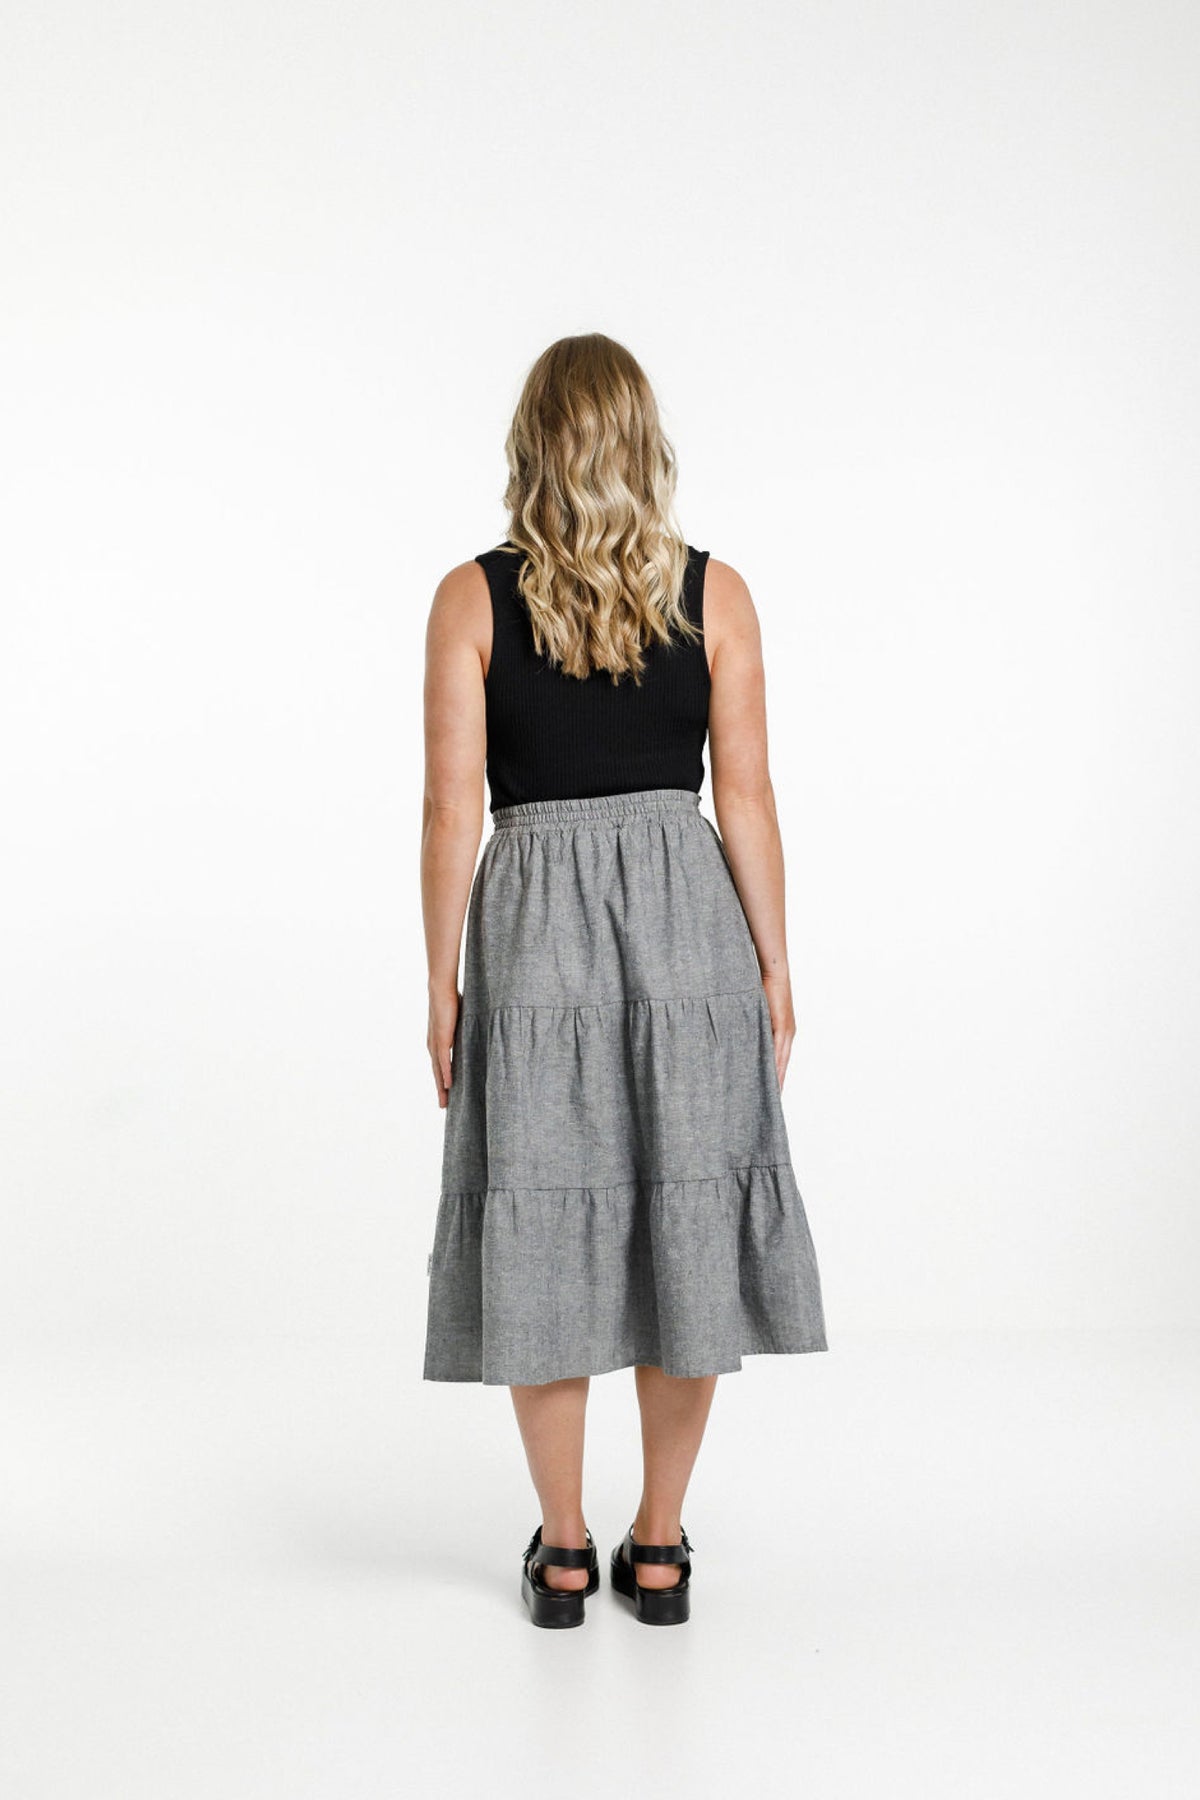 Lexi Skirt Charcoal